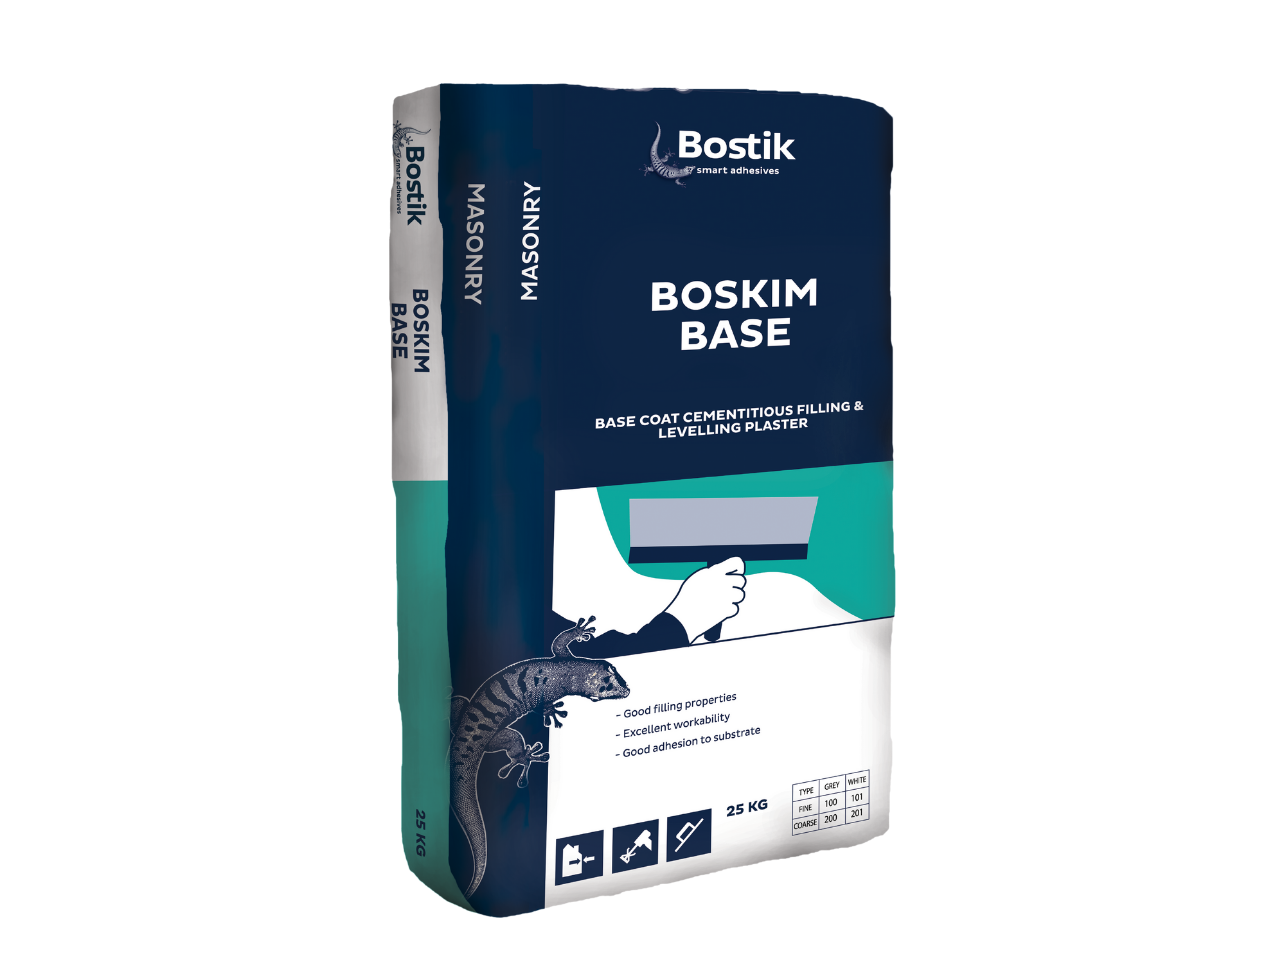 bostik-singapore-product-boskim-base-960x720.png